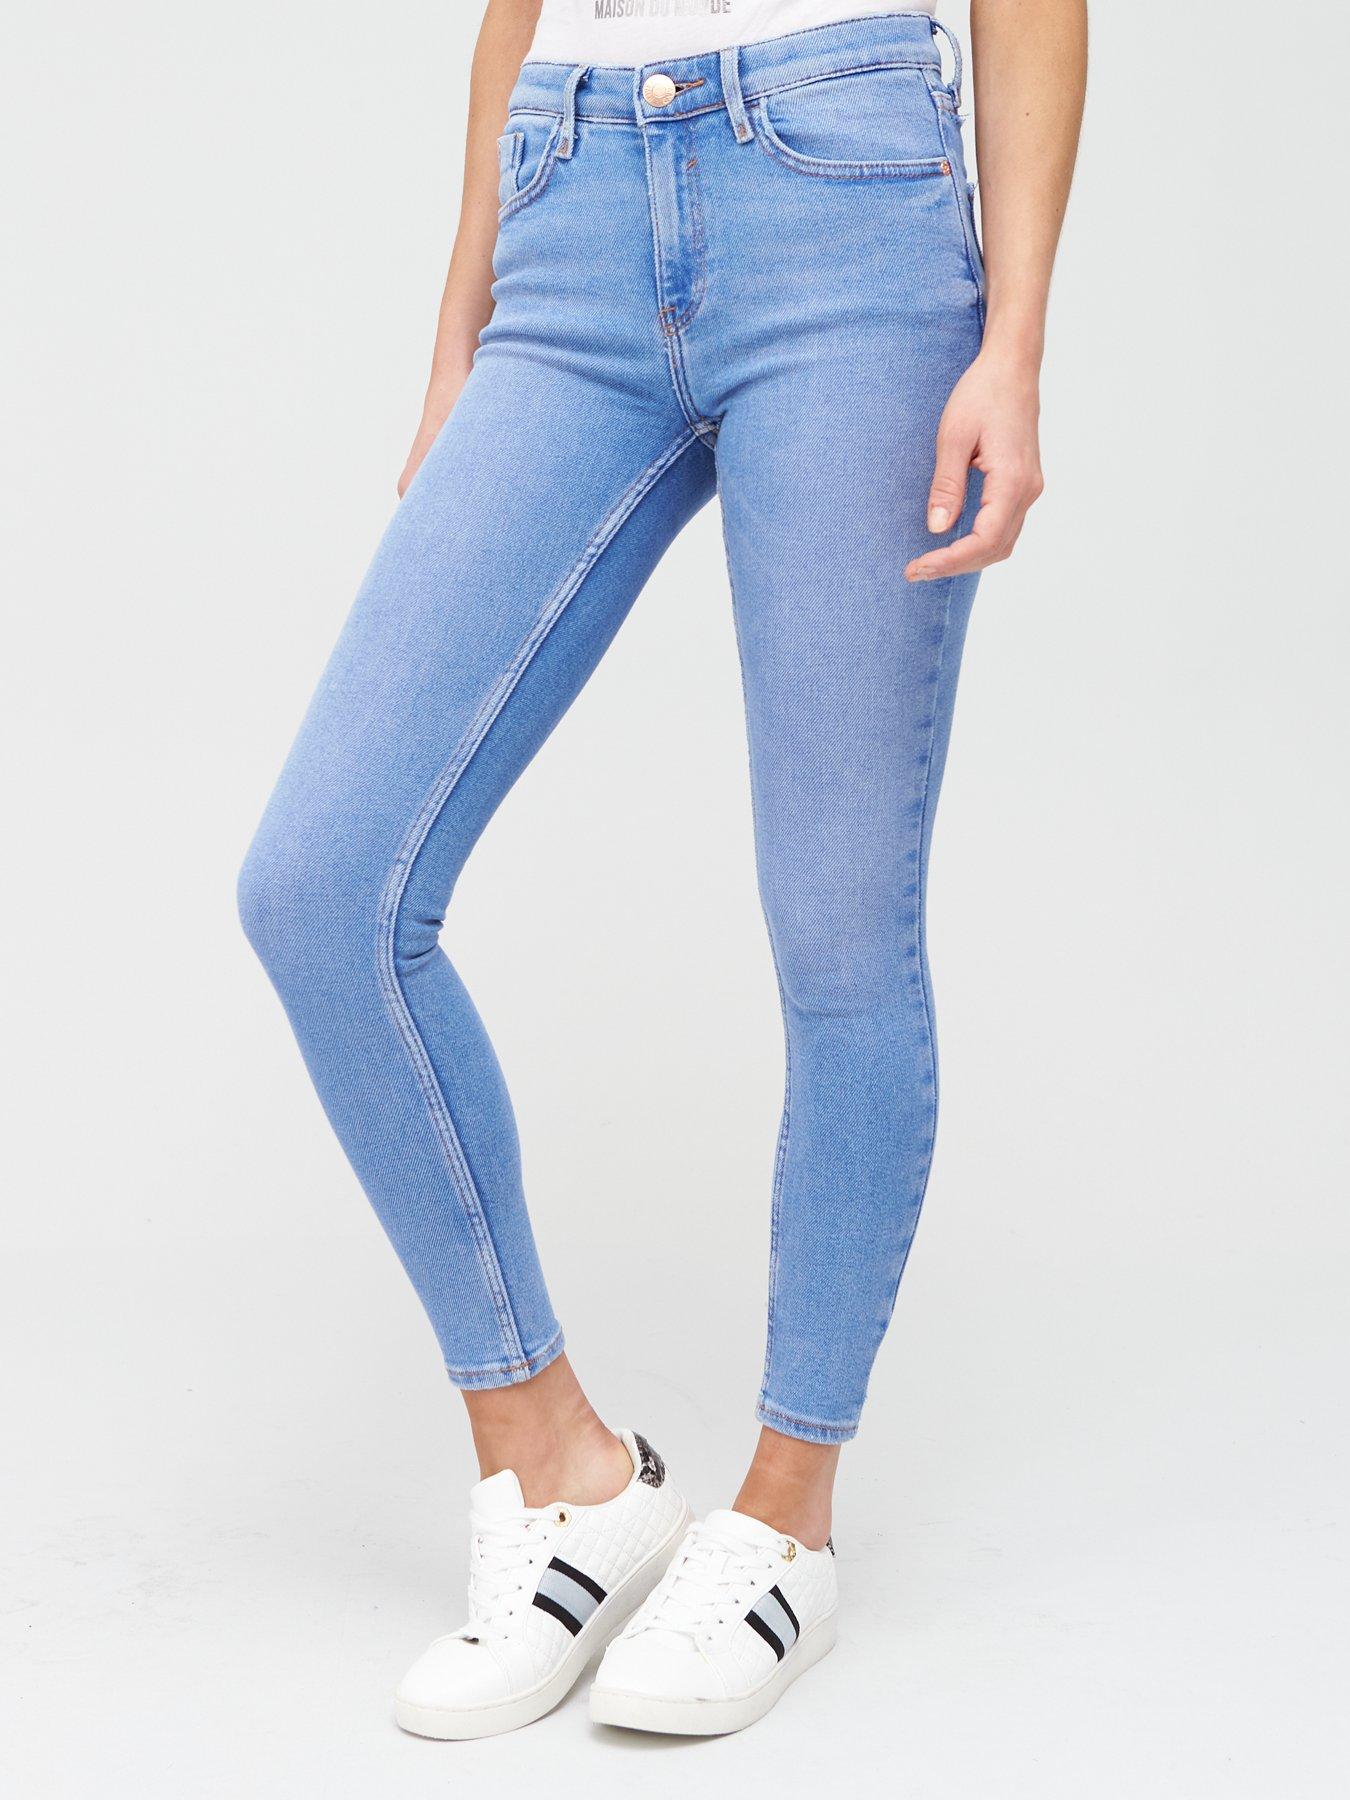 river island amelie skinny jeans